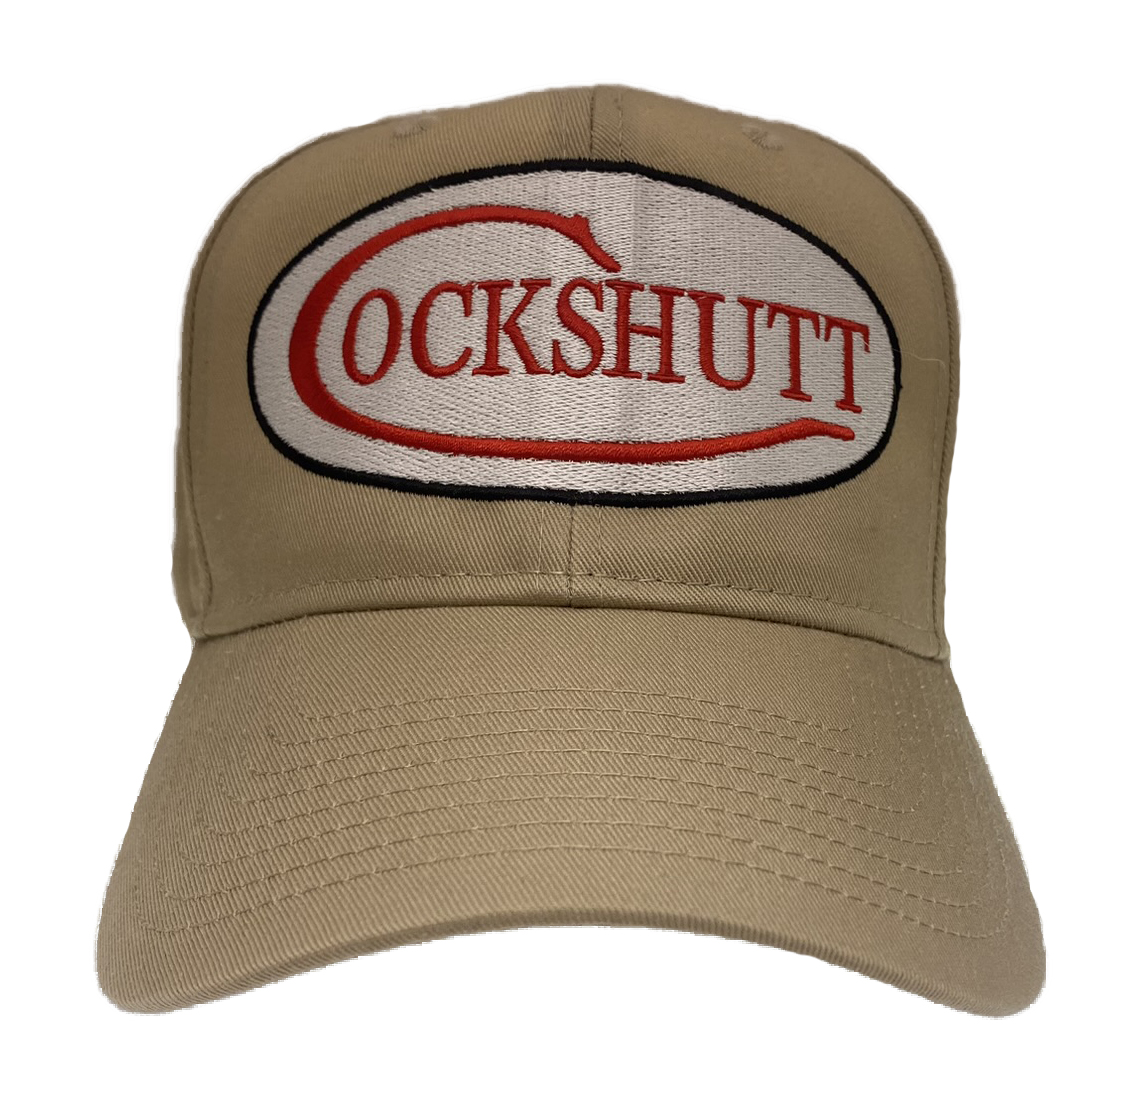 Cockshutt Farm Equipment Plow Company Embroidered Cap Hat #44-9200K -  Locomotive Logos